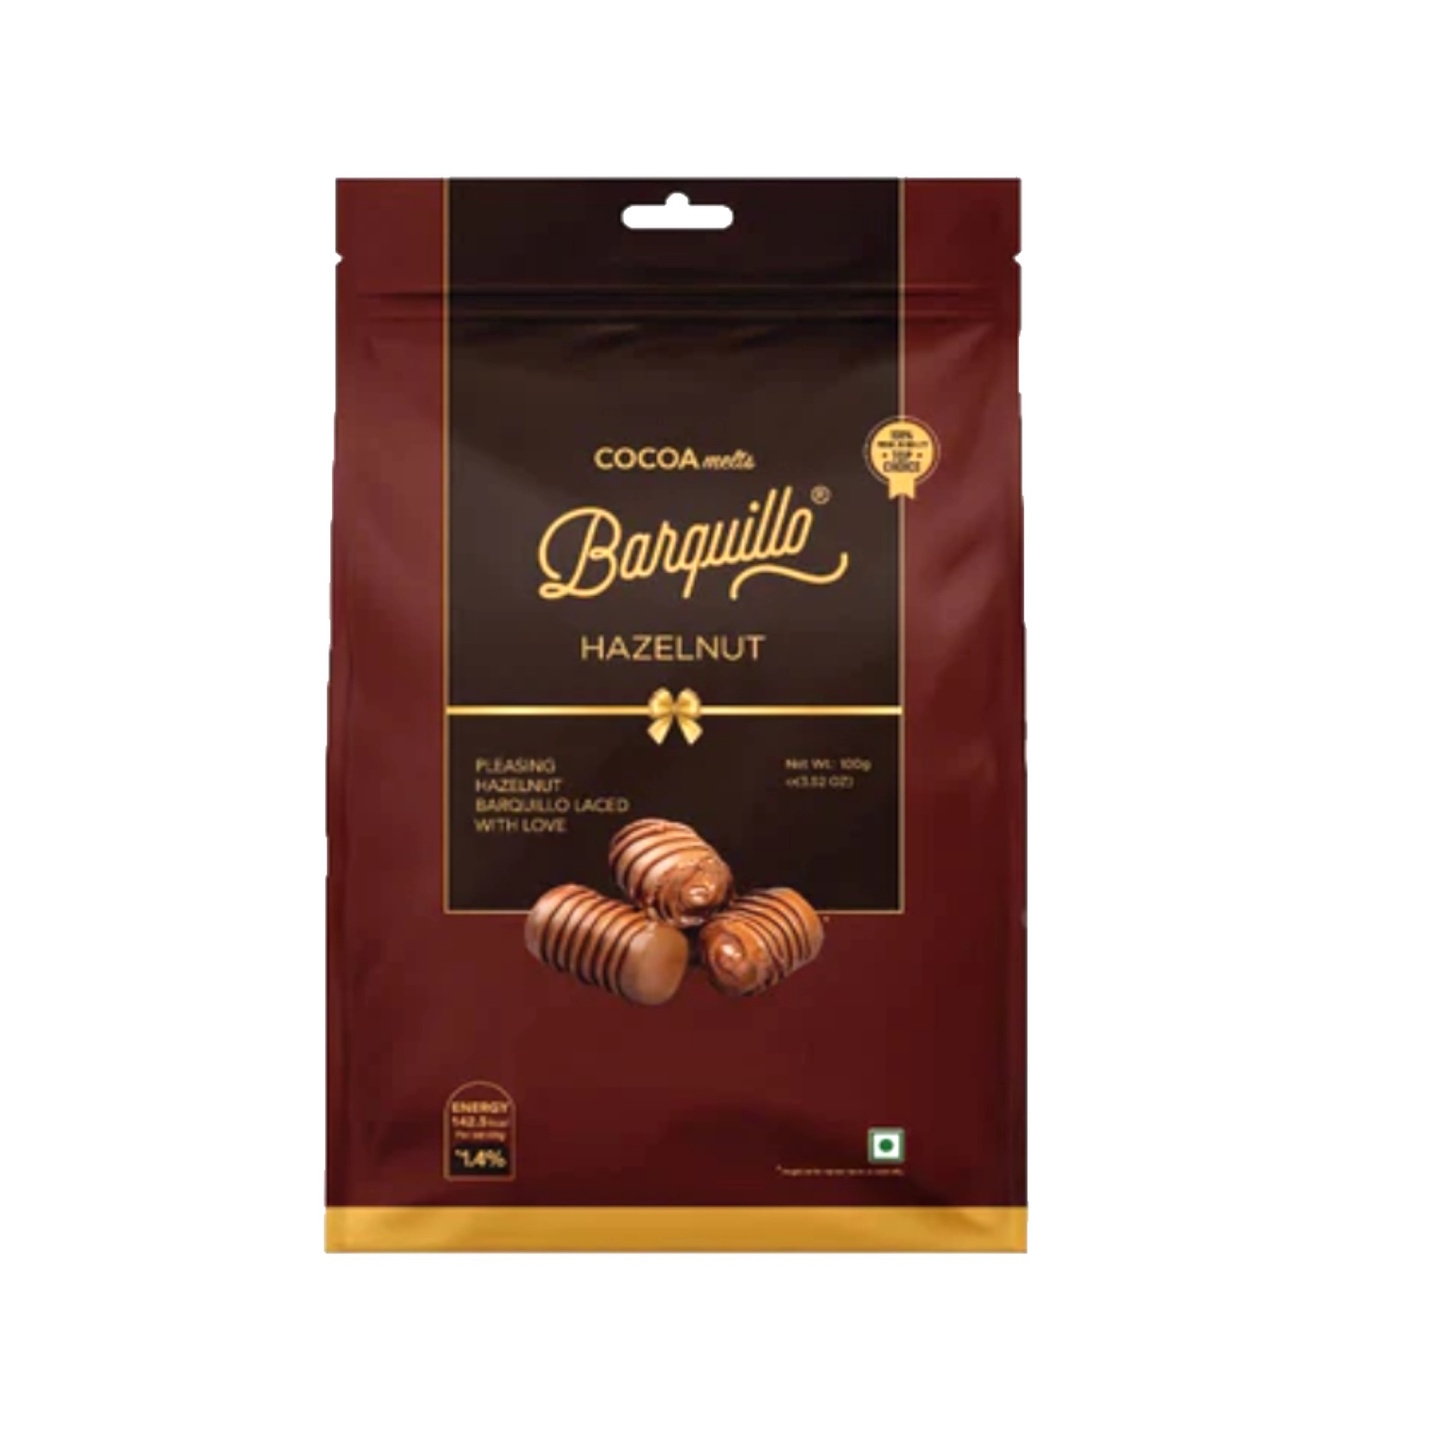 Cocoa Melts Barquillo Hazelnut Chocolate 100 Gms